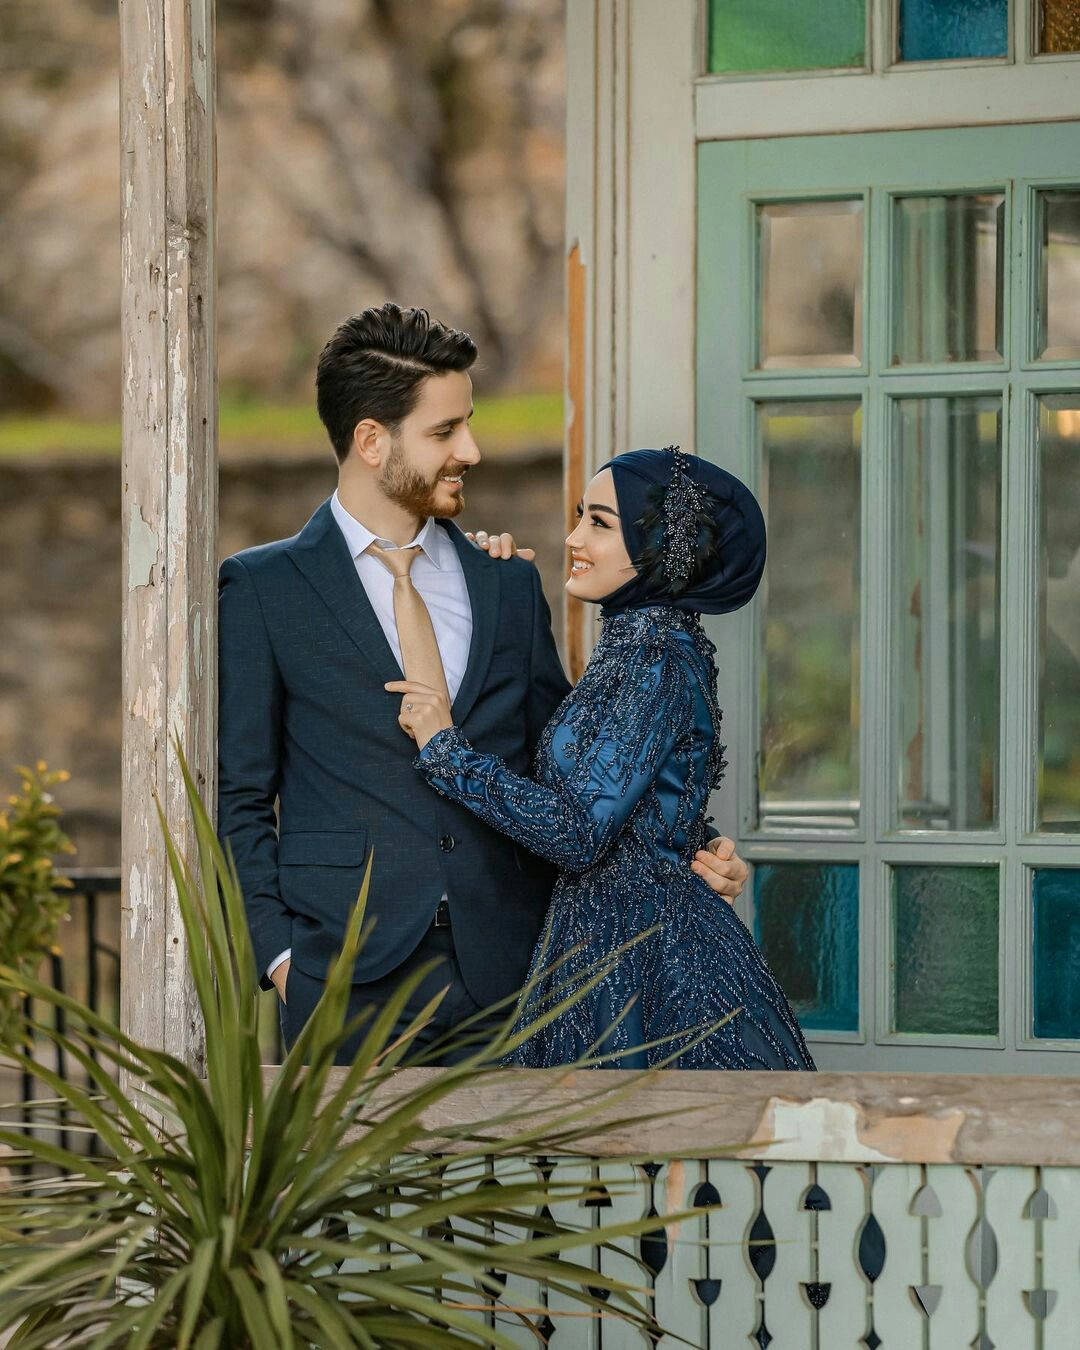 Muslim Couple At Veranda Photoshoot Wallpaper